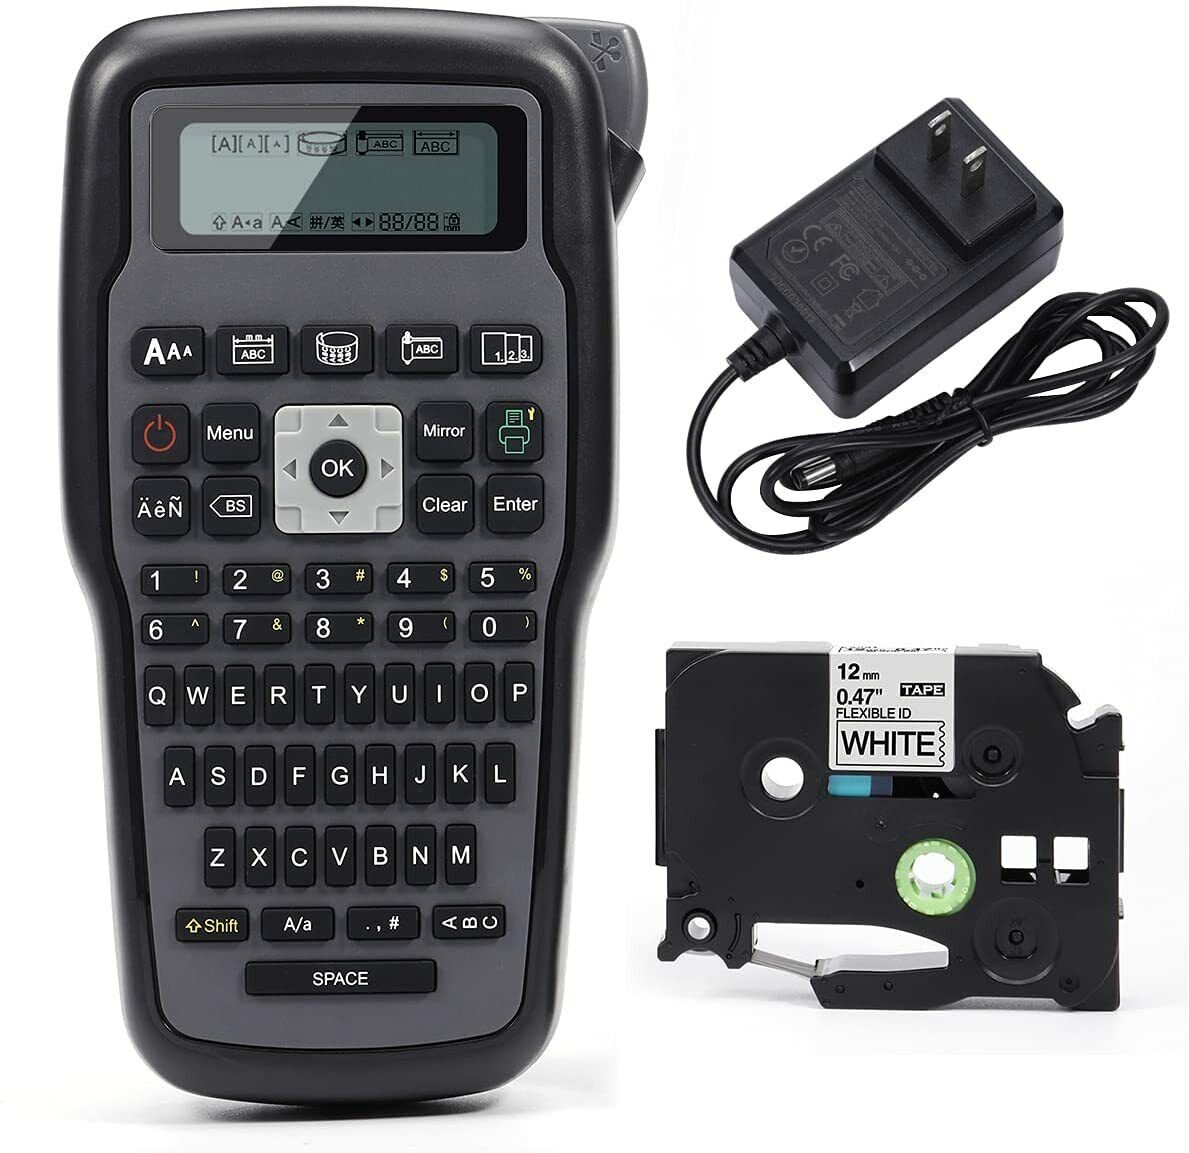 E1000 PRO Portabl Label Maker  PT-H110 Compatible For Brother TZe-231 Wireless